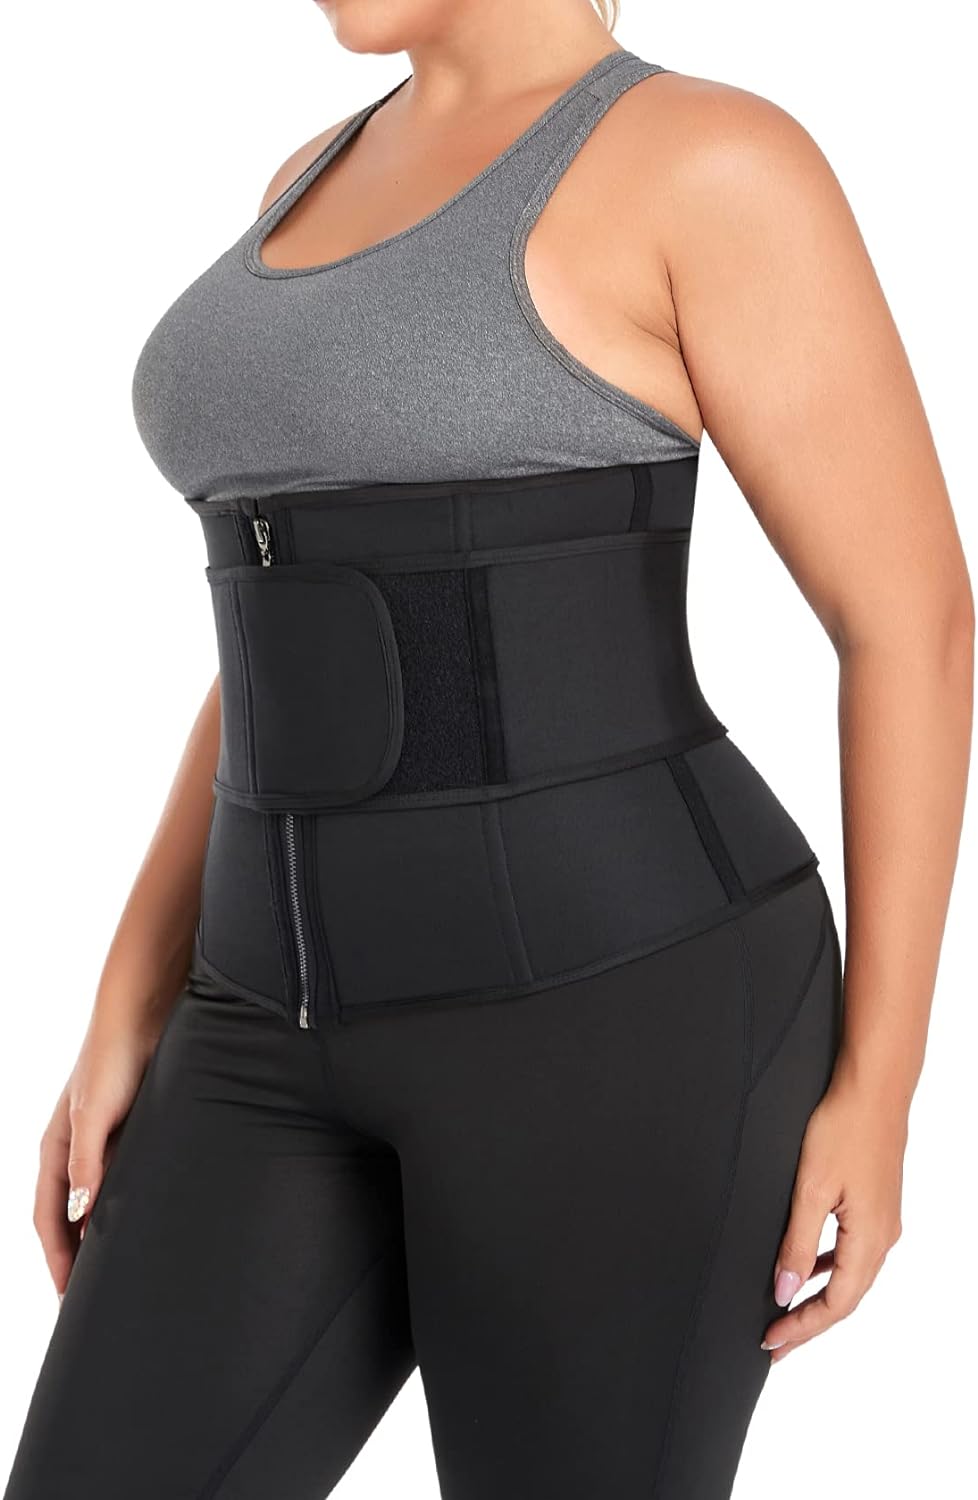 lttcbro Women's Plus Size Waist Cincher with Tummy Control Belt Workout Training Slimming Waist Trainer Sports Girdle